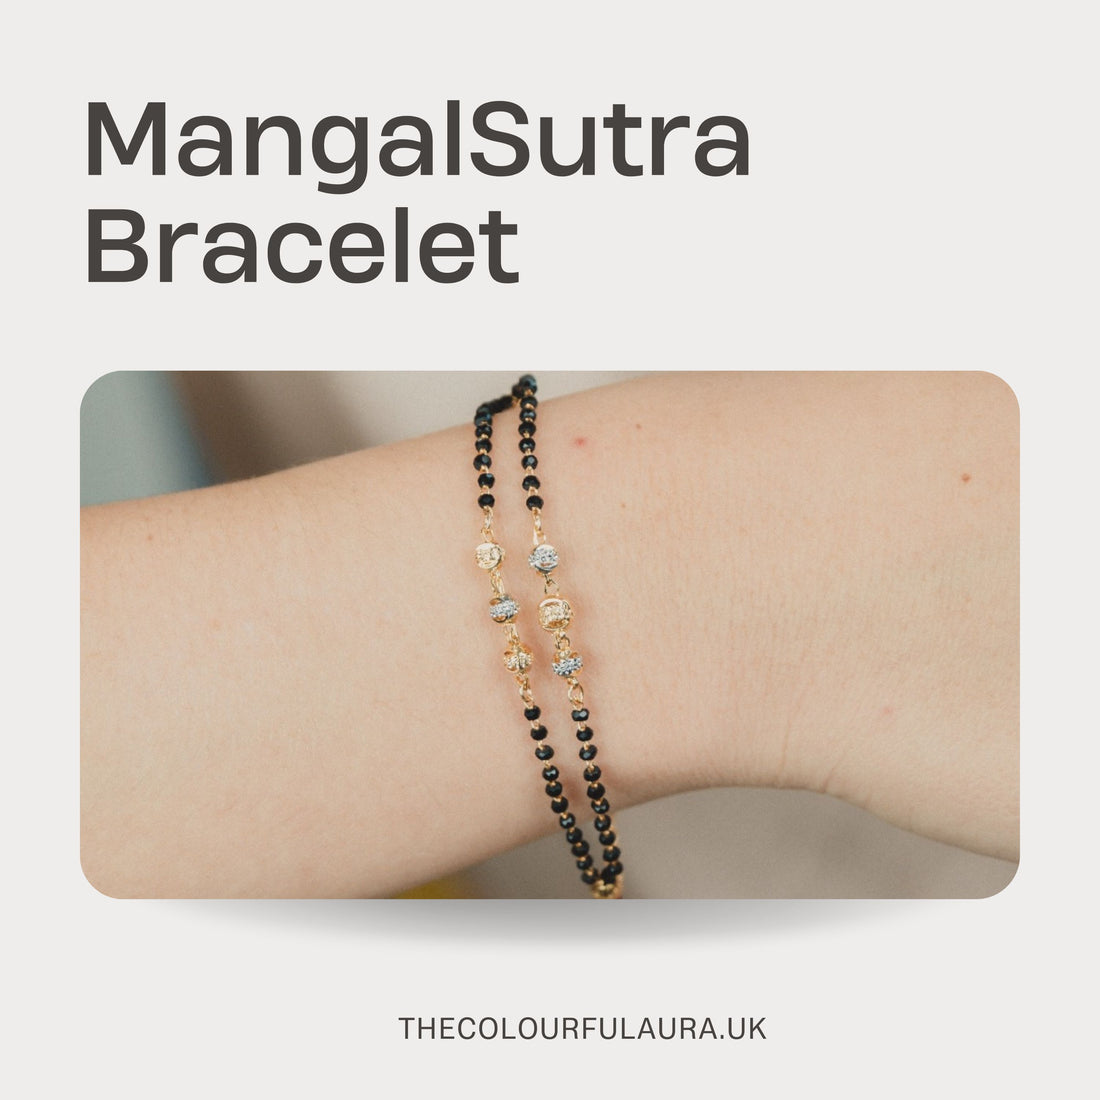 Know About MangalSutra Bracelet